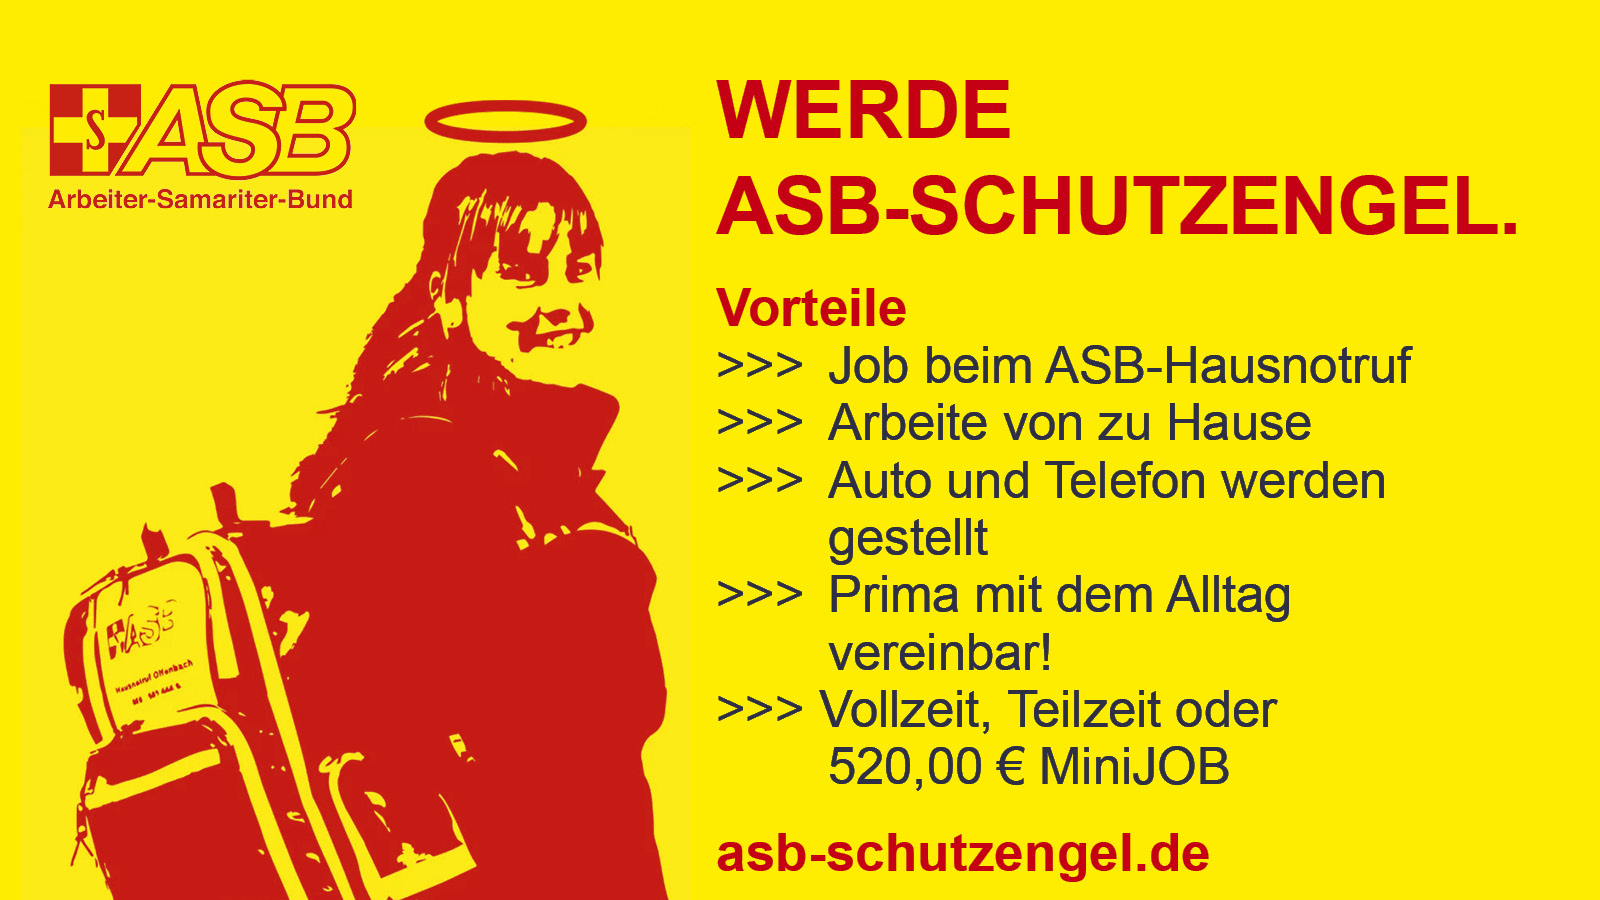 ASB Social-Media-Booster_ASB-Schutzengel_1200x675 px_2022-11-07.jpg